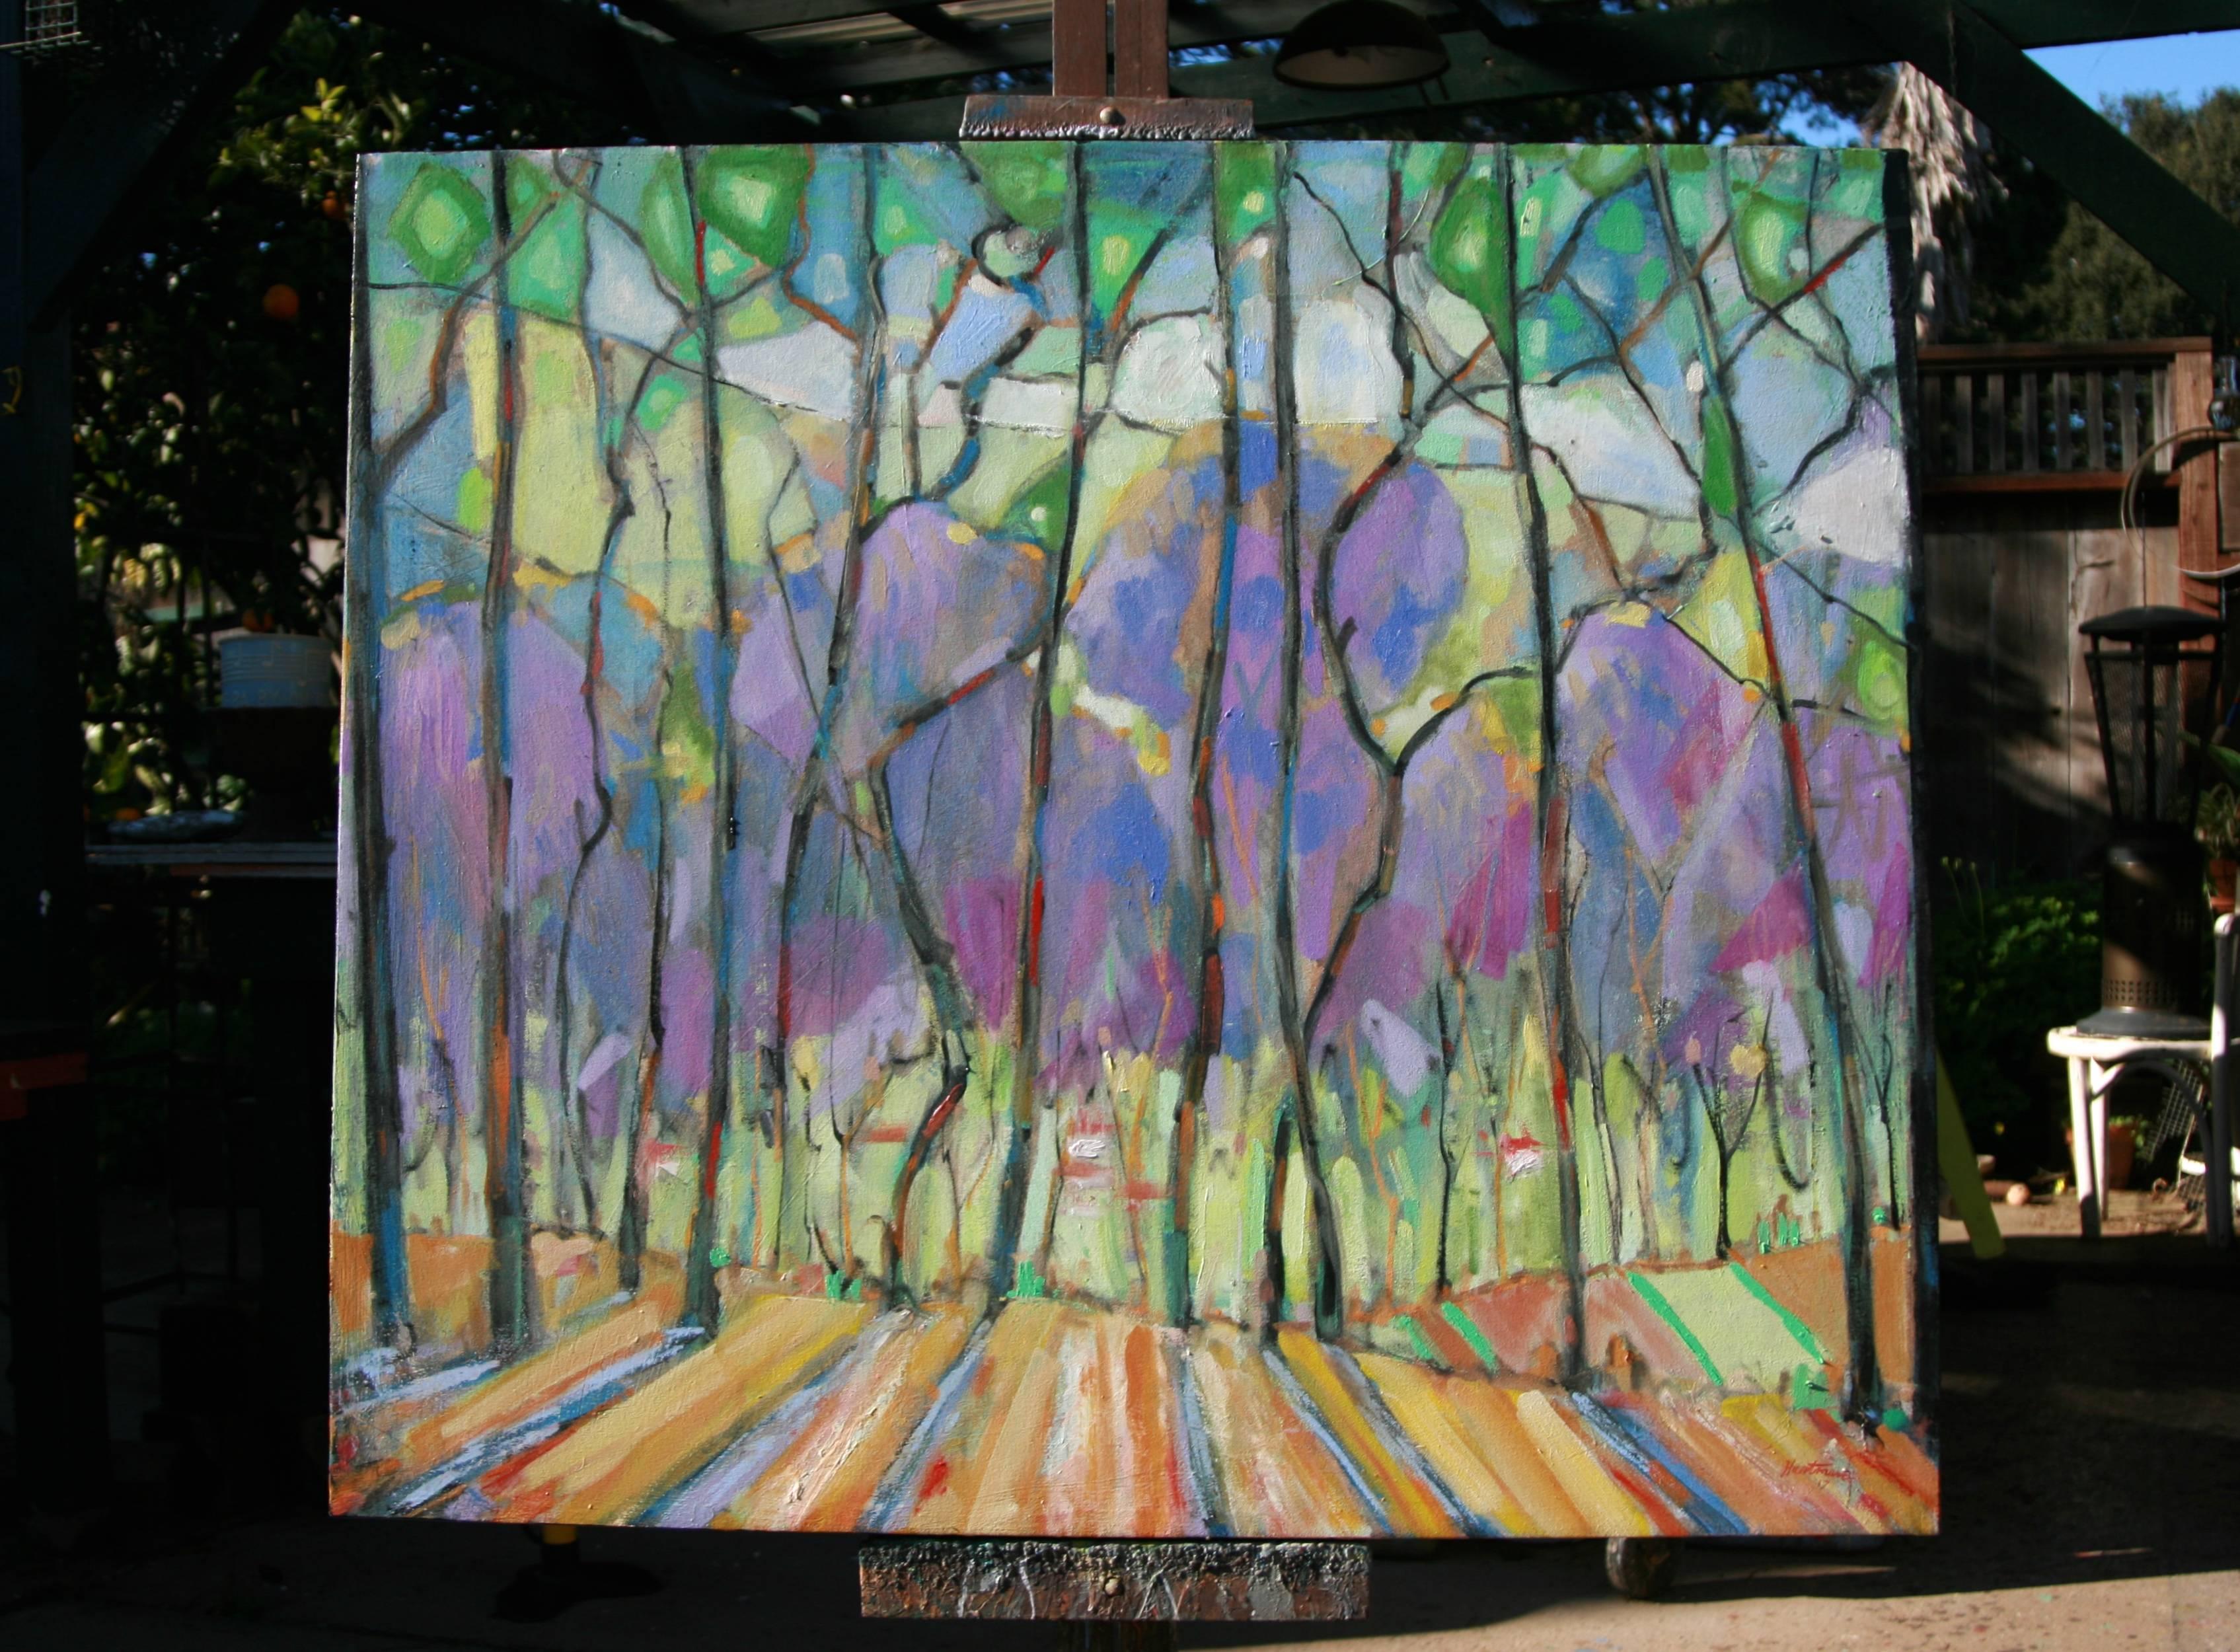 Saratoga Plumeria through the Trees - Impressionist Painting by James Hartman